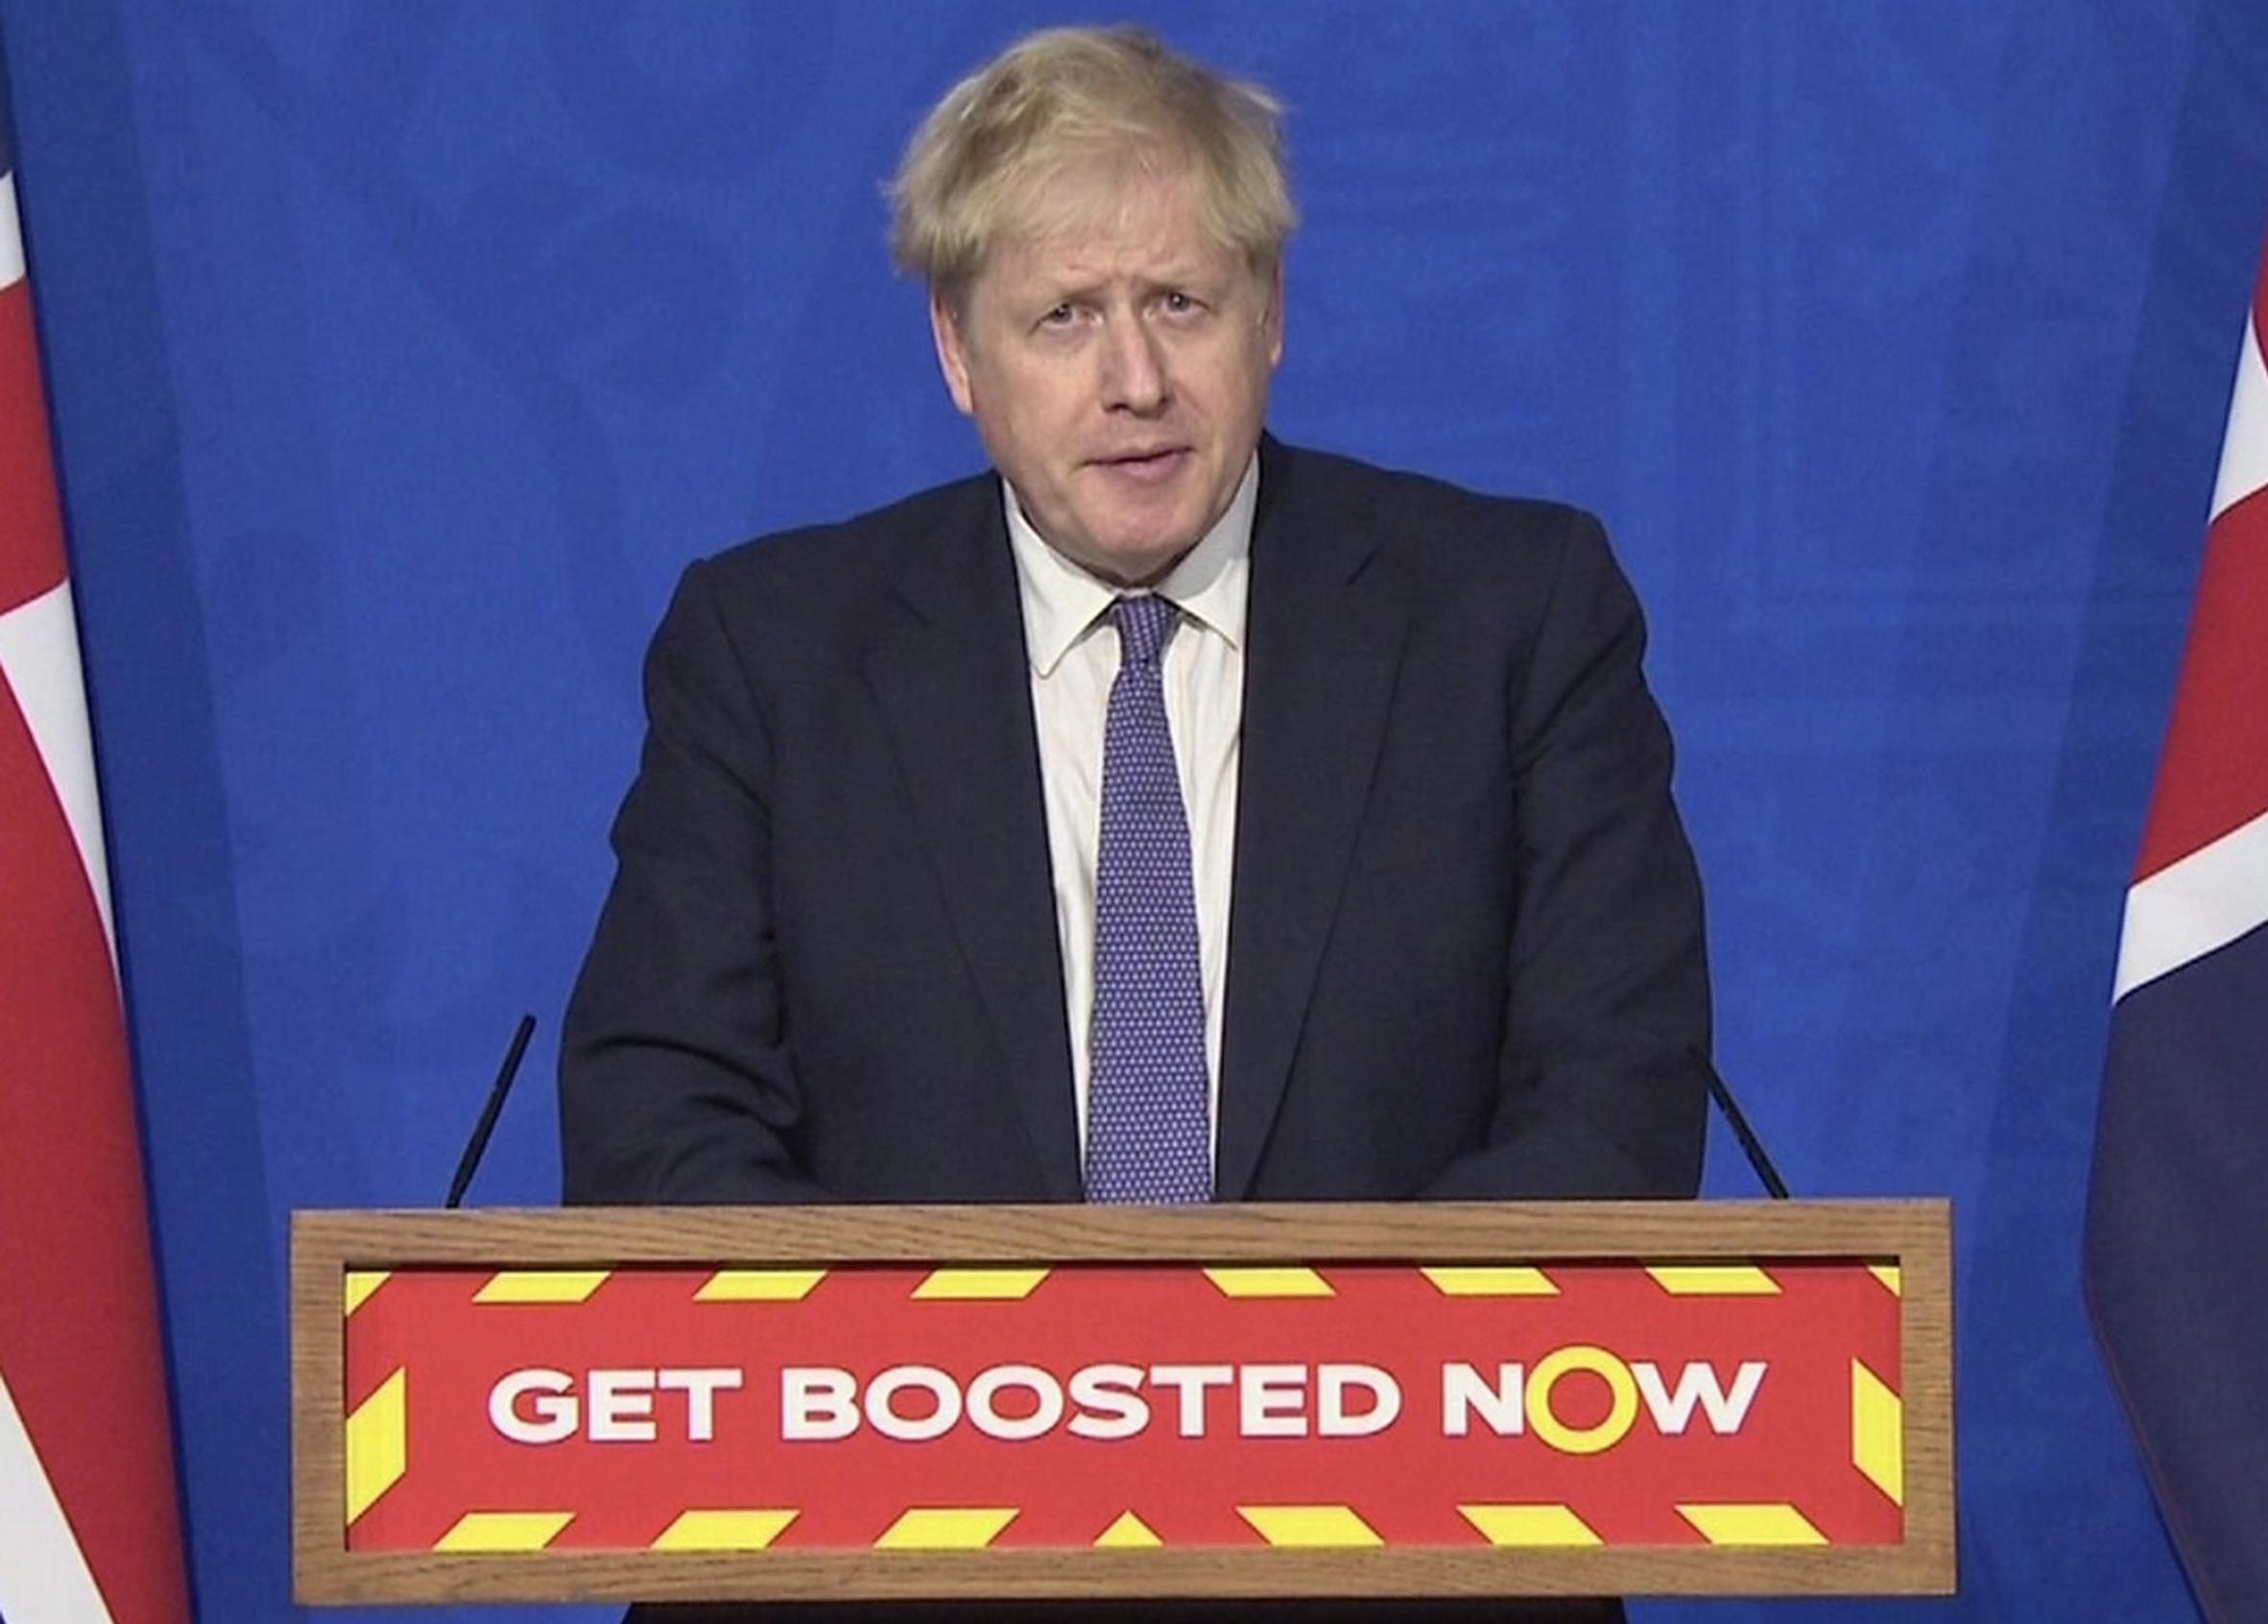 PM Boris Johnson speaking at 10 Downing Streey on 4 January